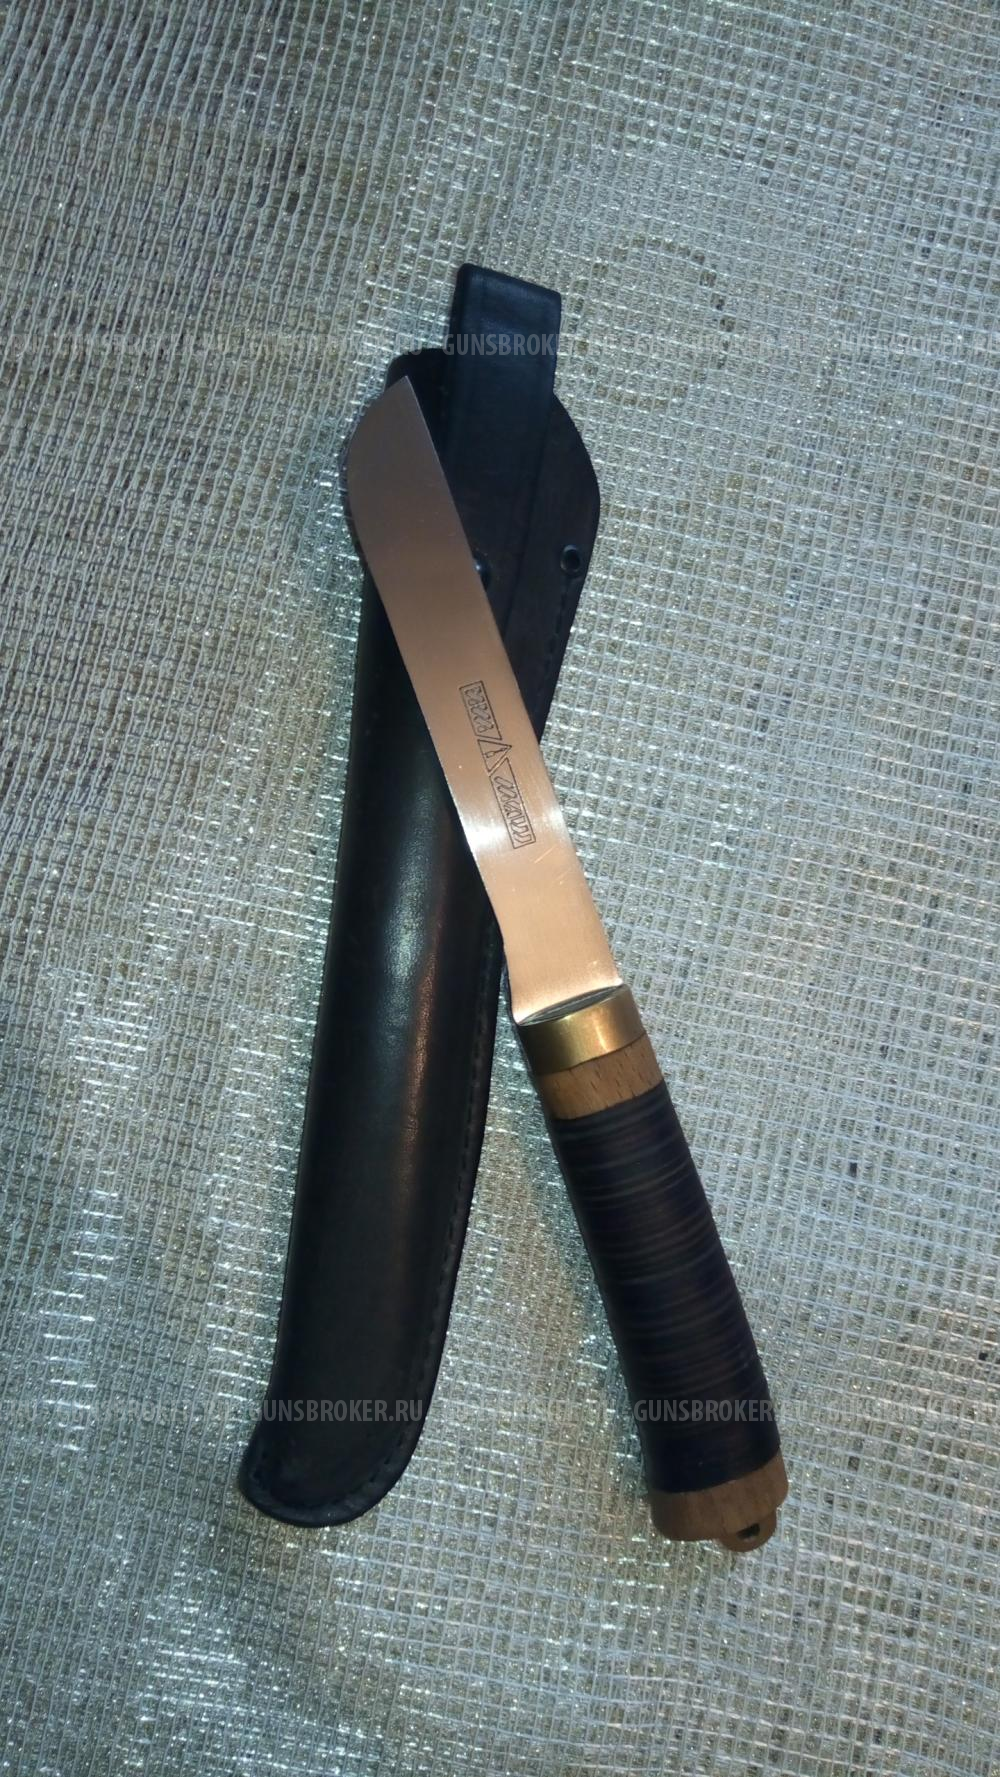 Нож НО-8 ИЖМАШ